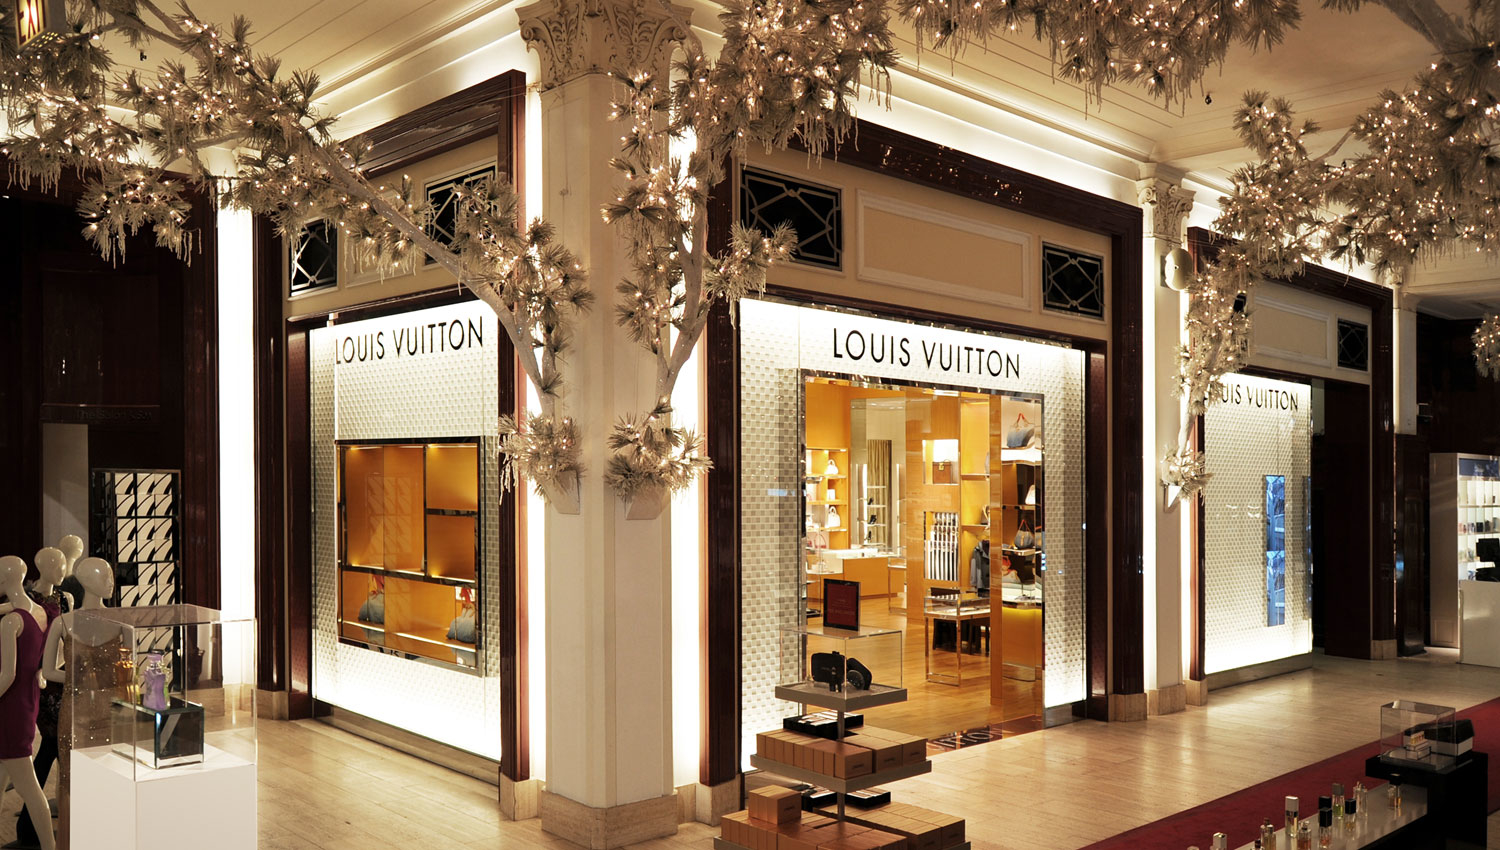 Louis Vuitton New York Saks Fifth Ave, New York New York (NY) - www.paulmartinsmith.com